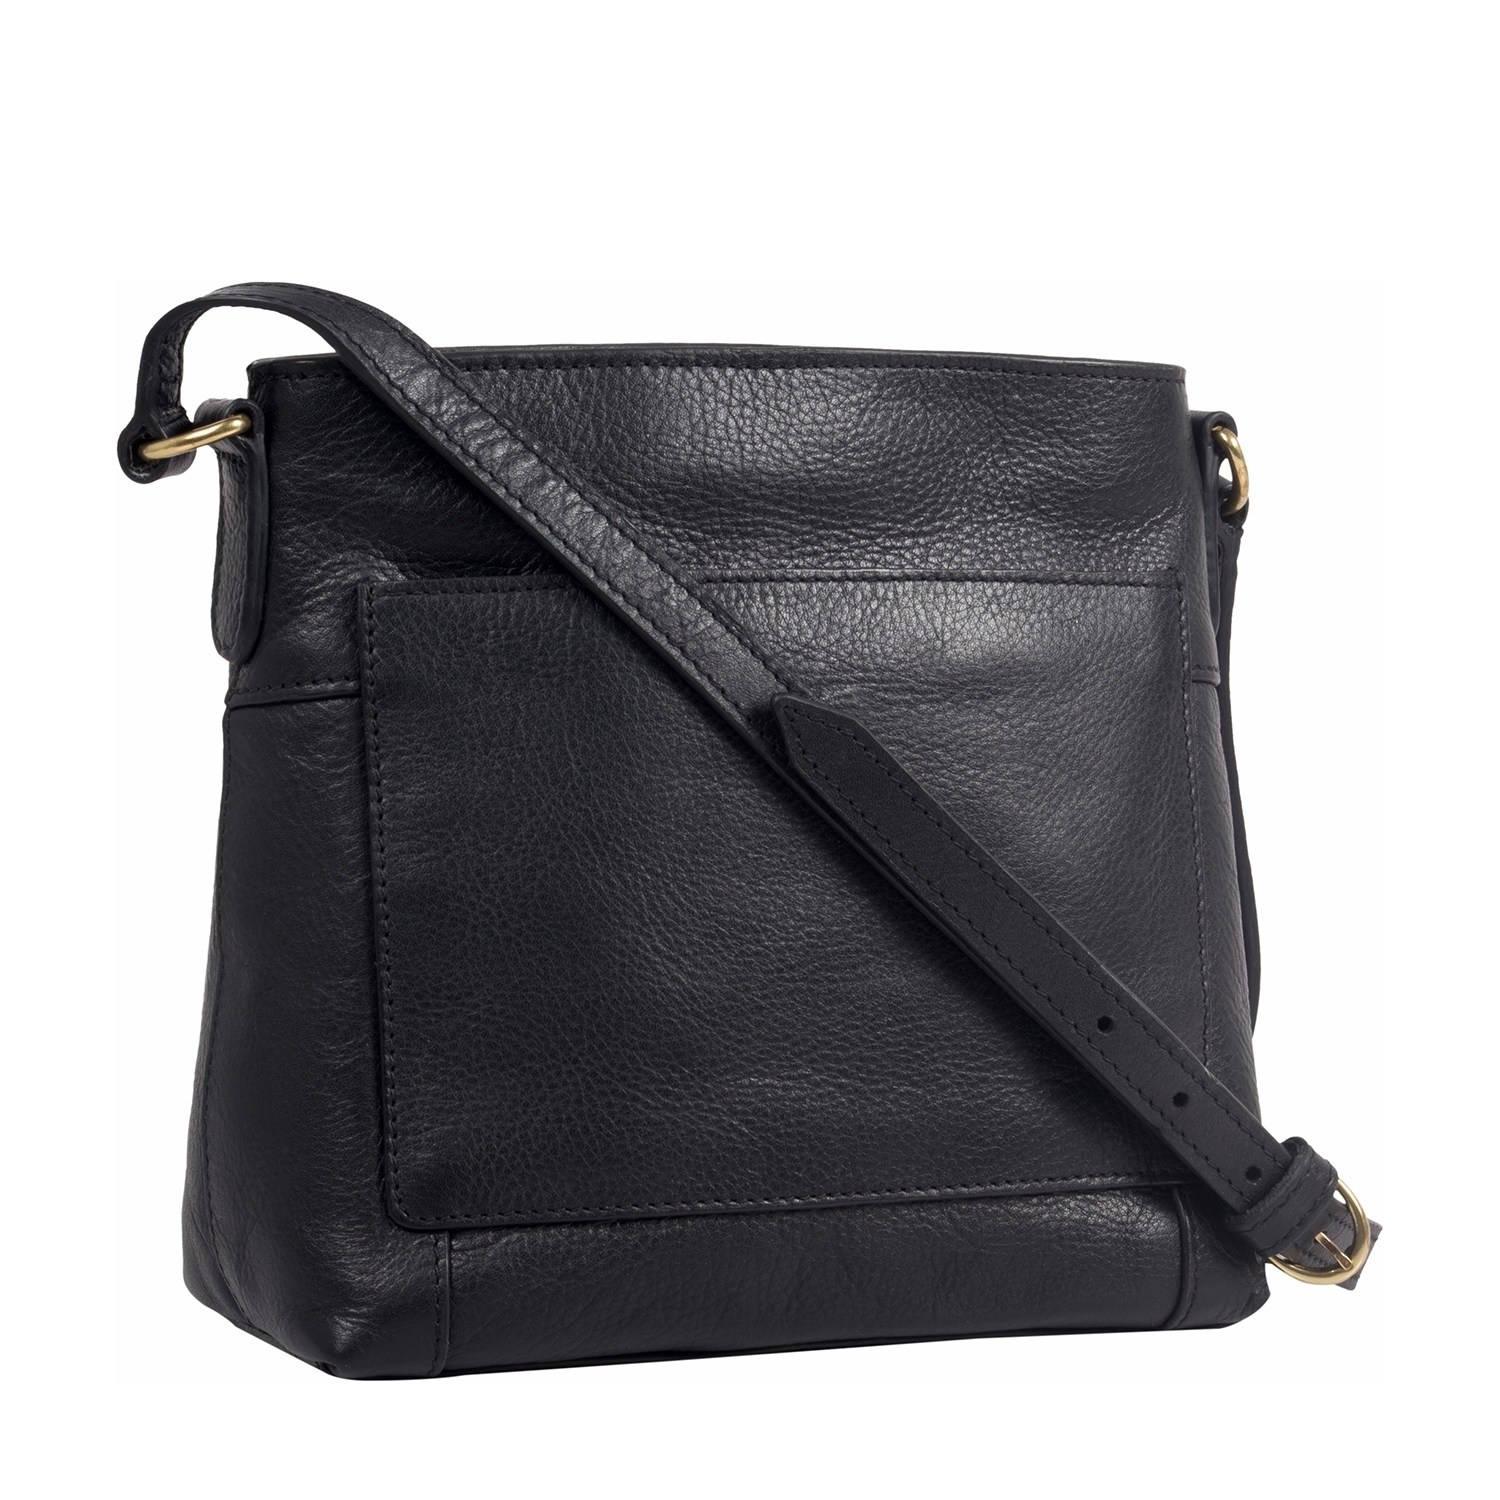 Amazon.com: Hidesign: Women's Leather Bags